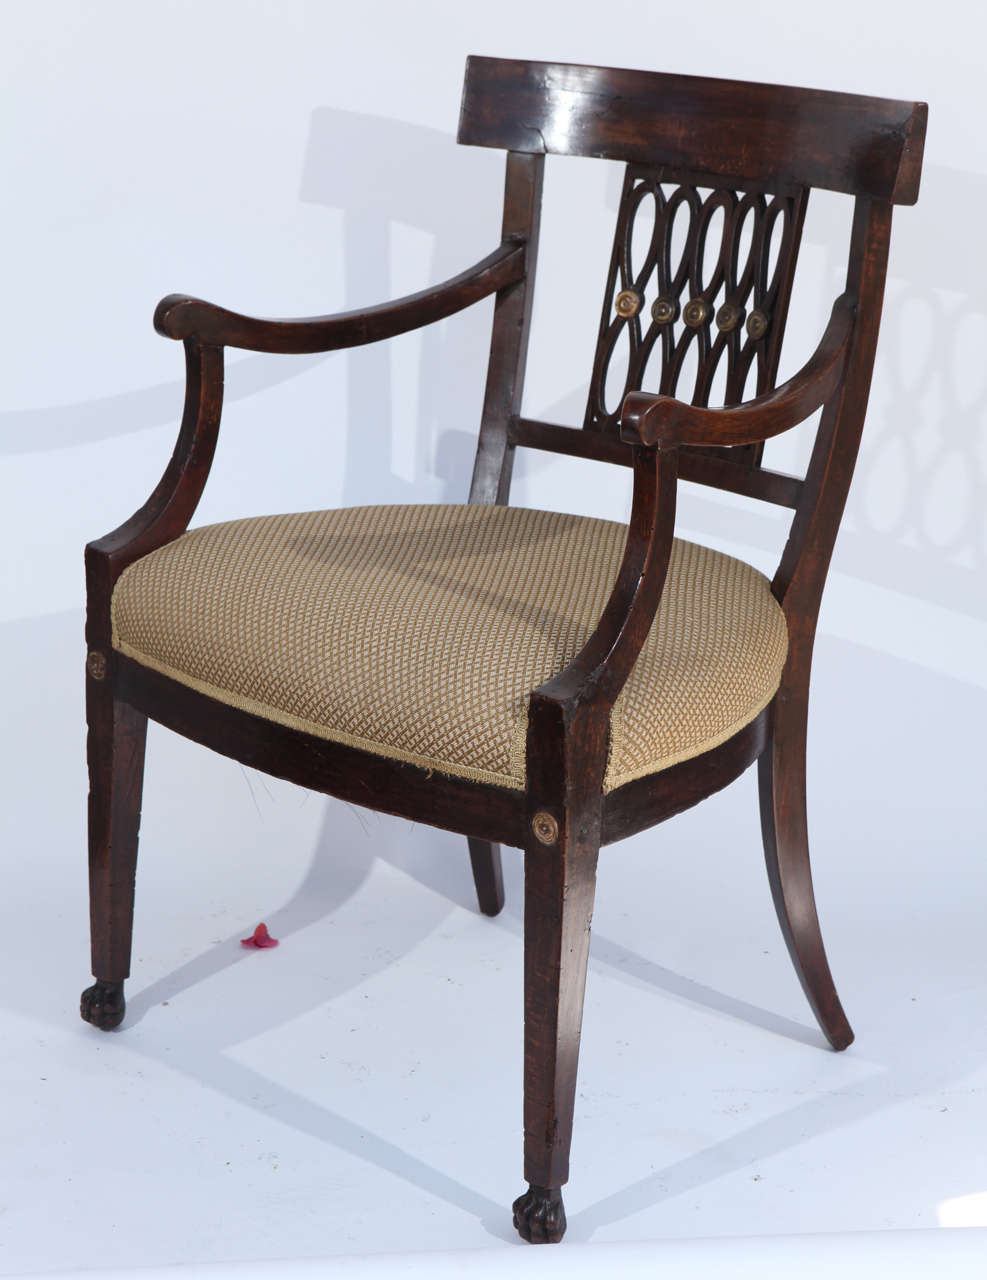 Single 18th century Italian walnut armchair with gilt details and claw feet.